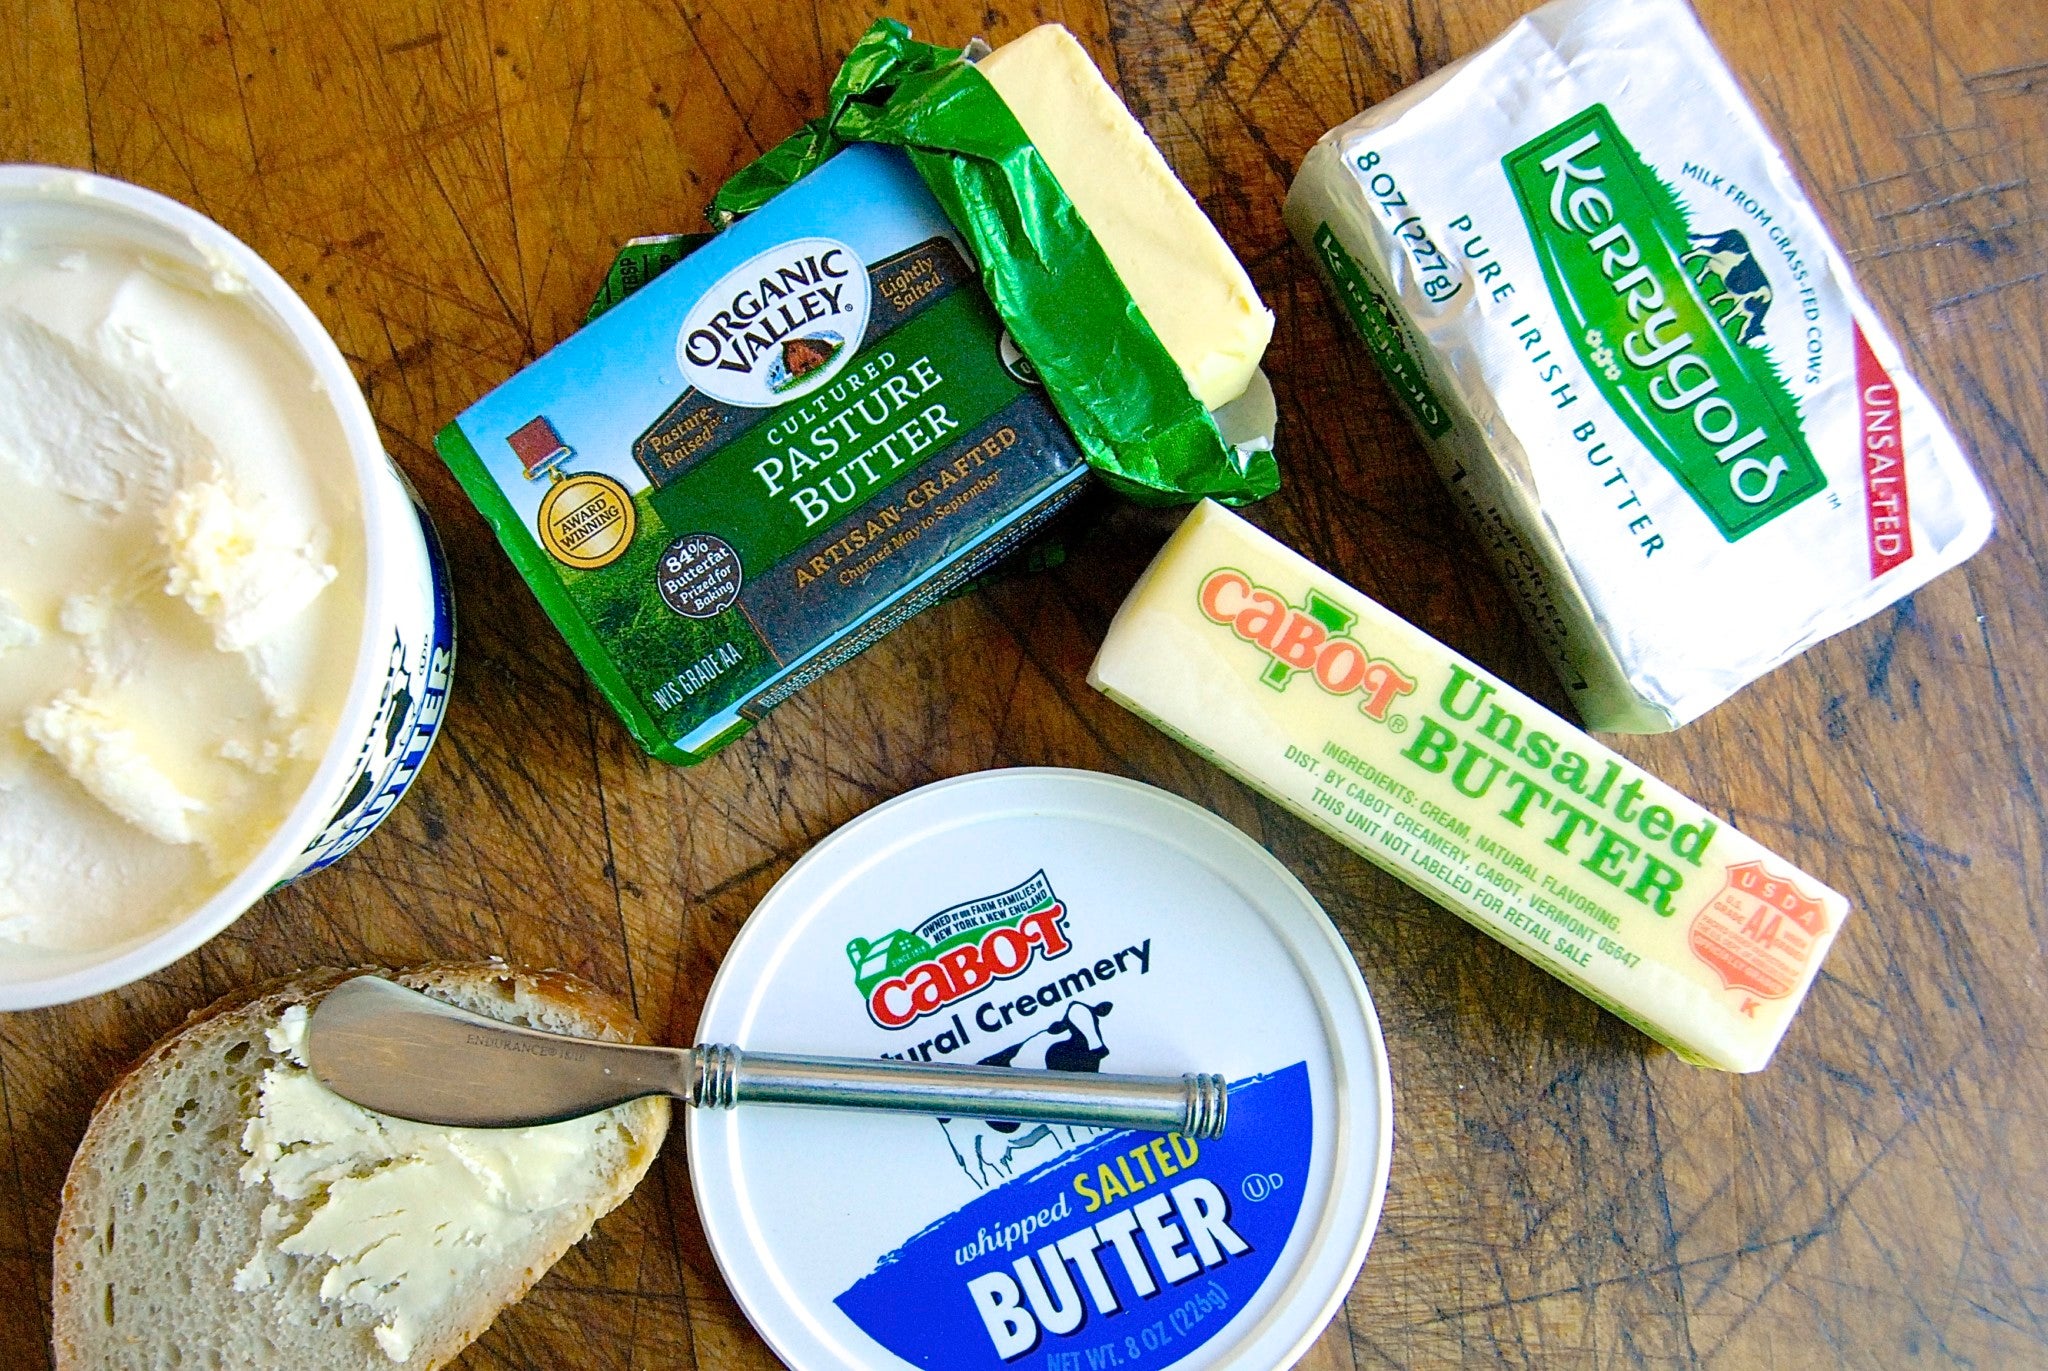 Quick home butter maker | for homemade butter